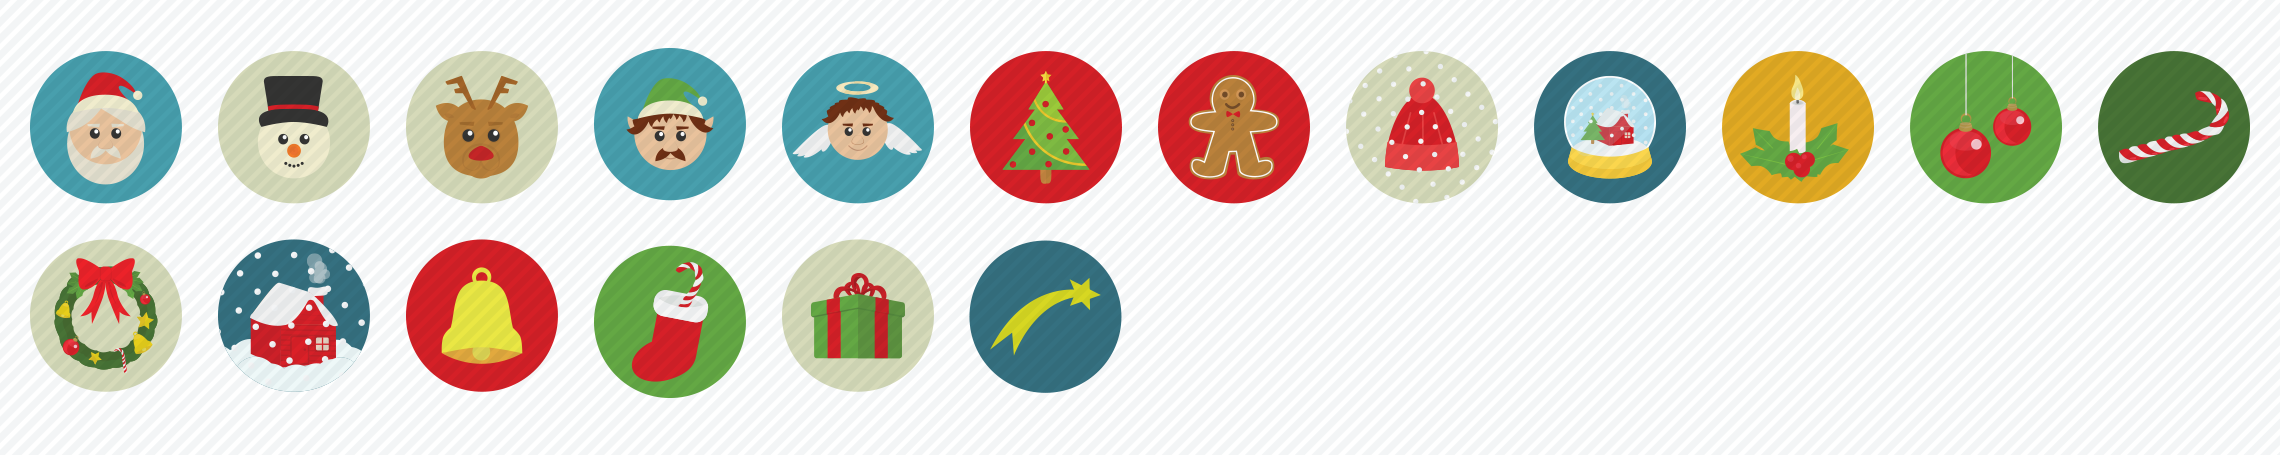 CHristmas-flat-icons-set